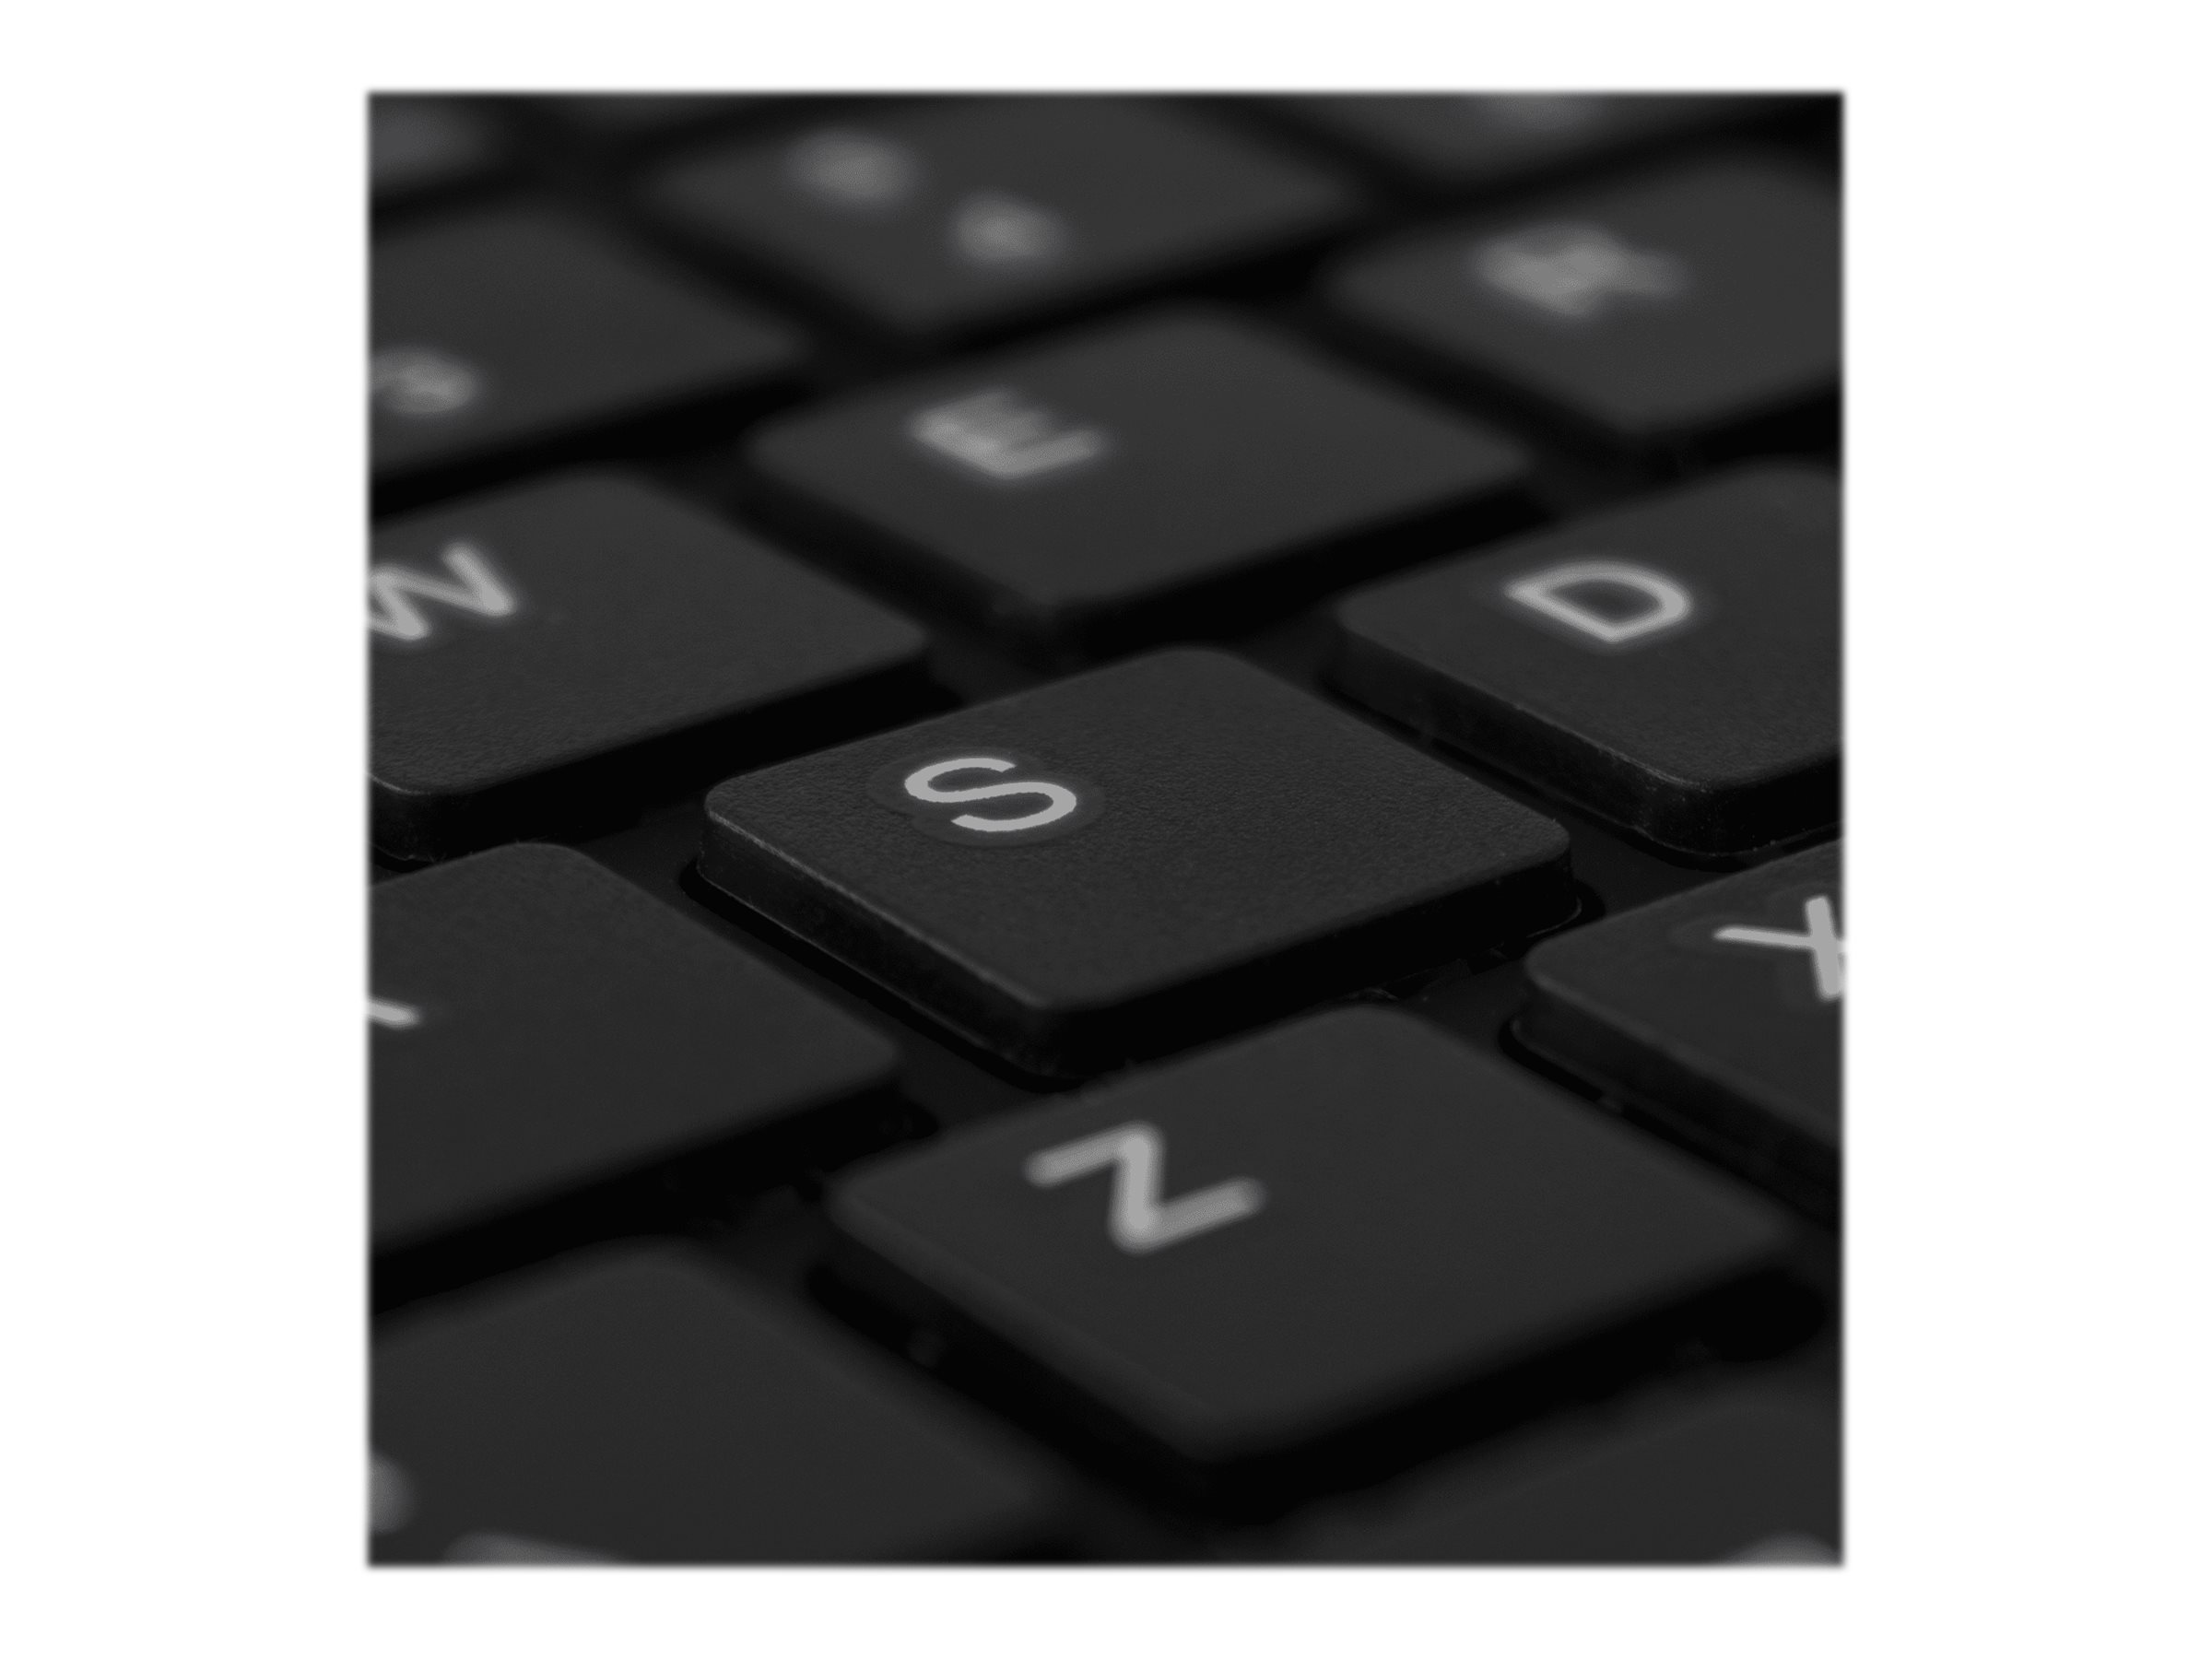 R-Go Split Ergonomische Tastatur, QWERTY (UK)